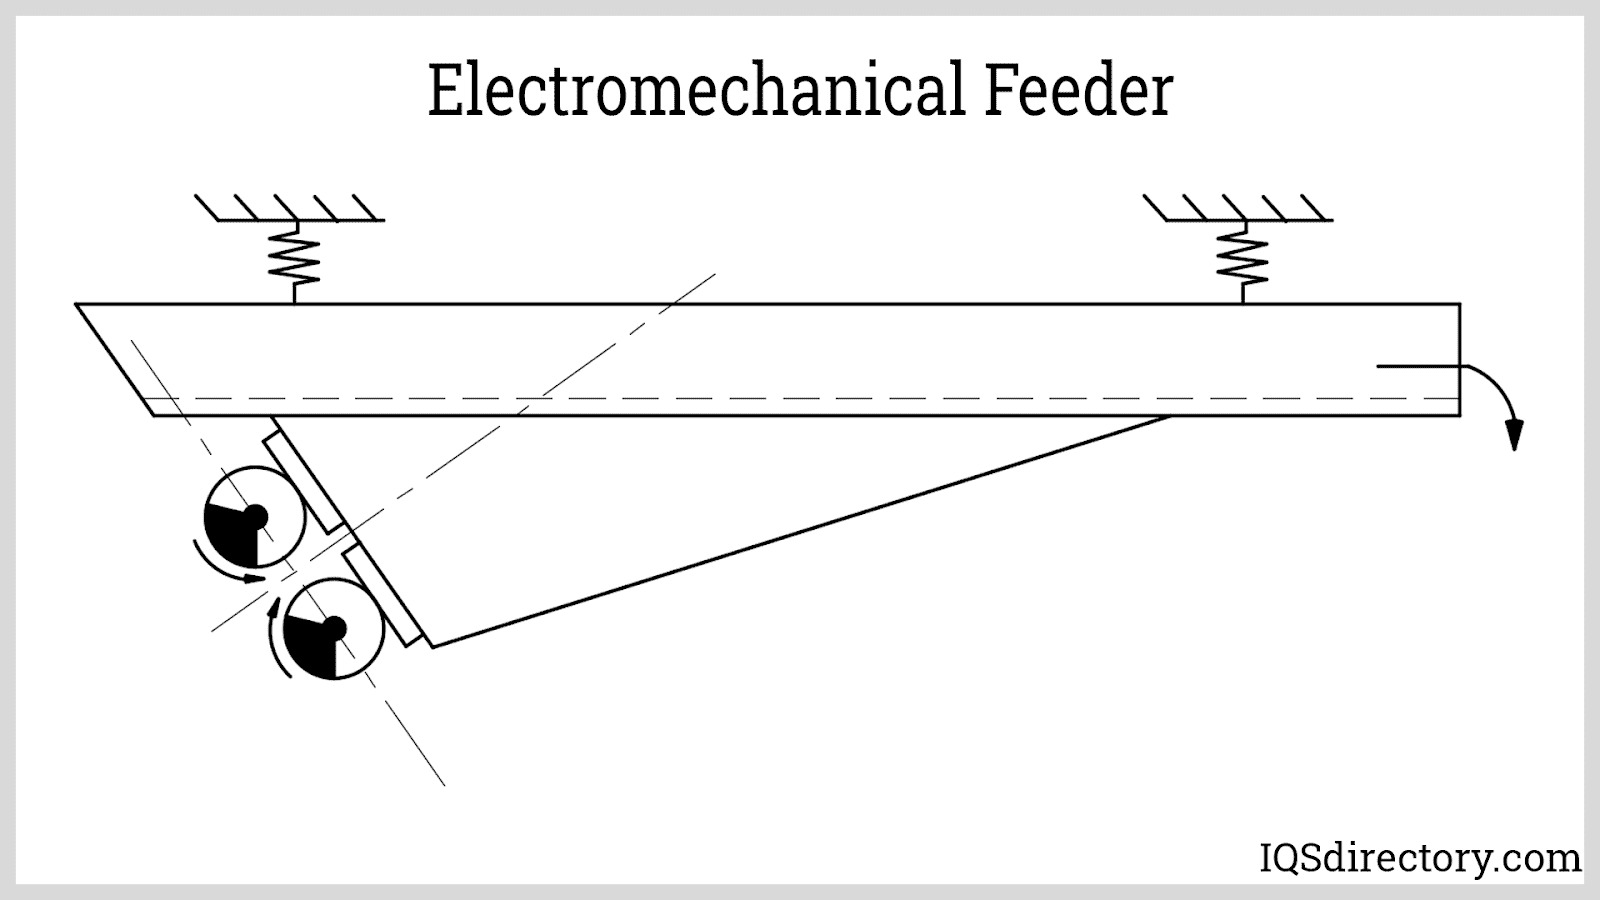 Electromechanical Feeder